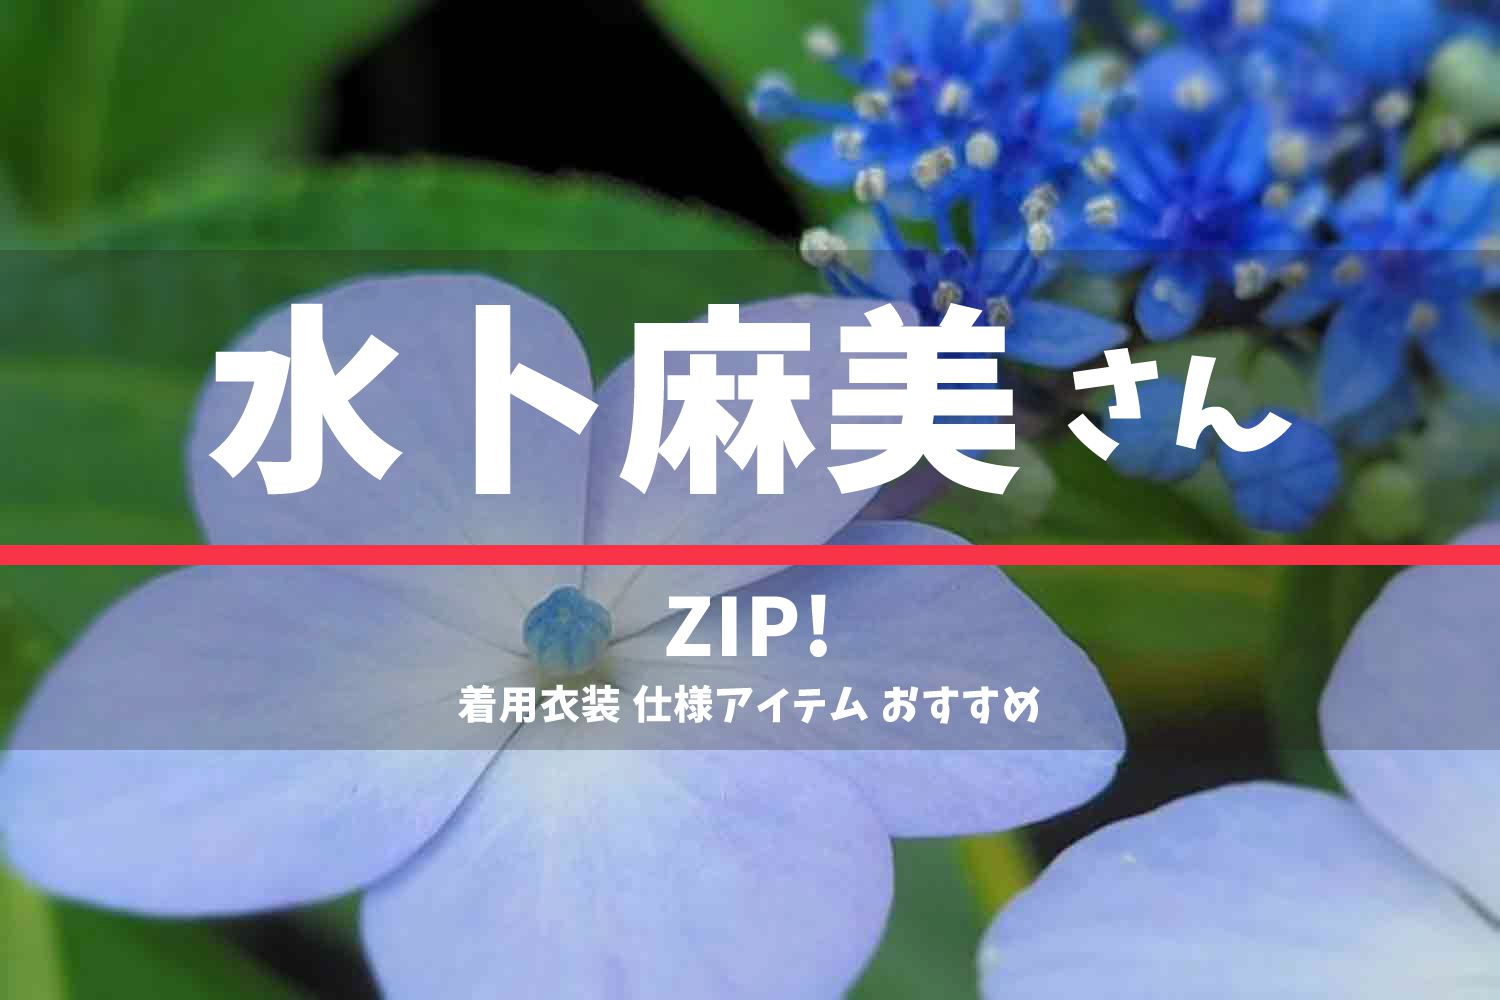 ZIP! 水卜麻美さん 番組 衣装 2022年7月11日放送